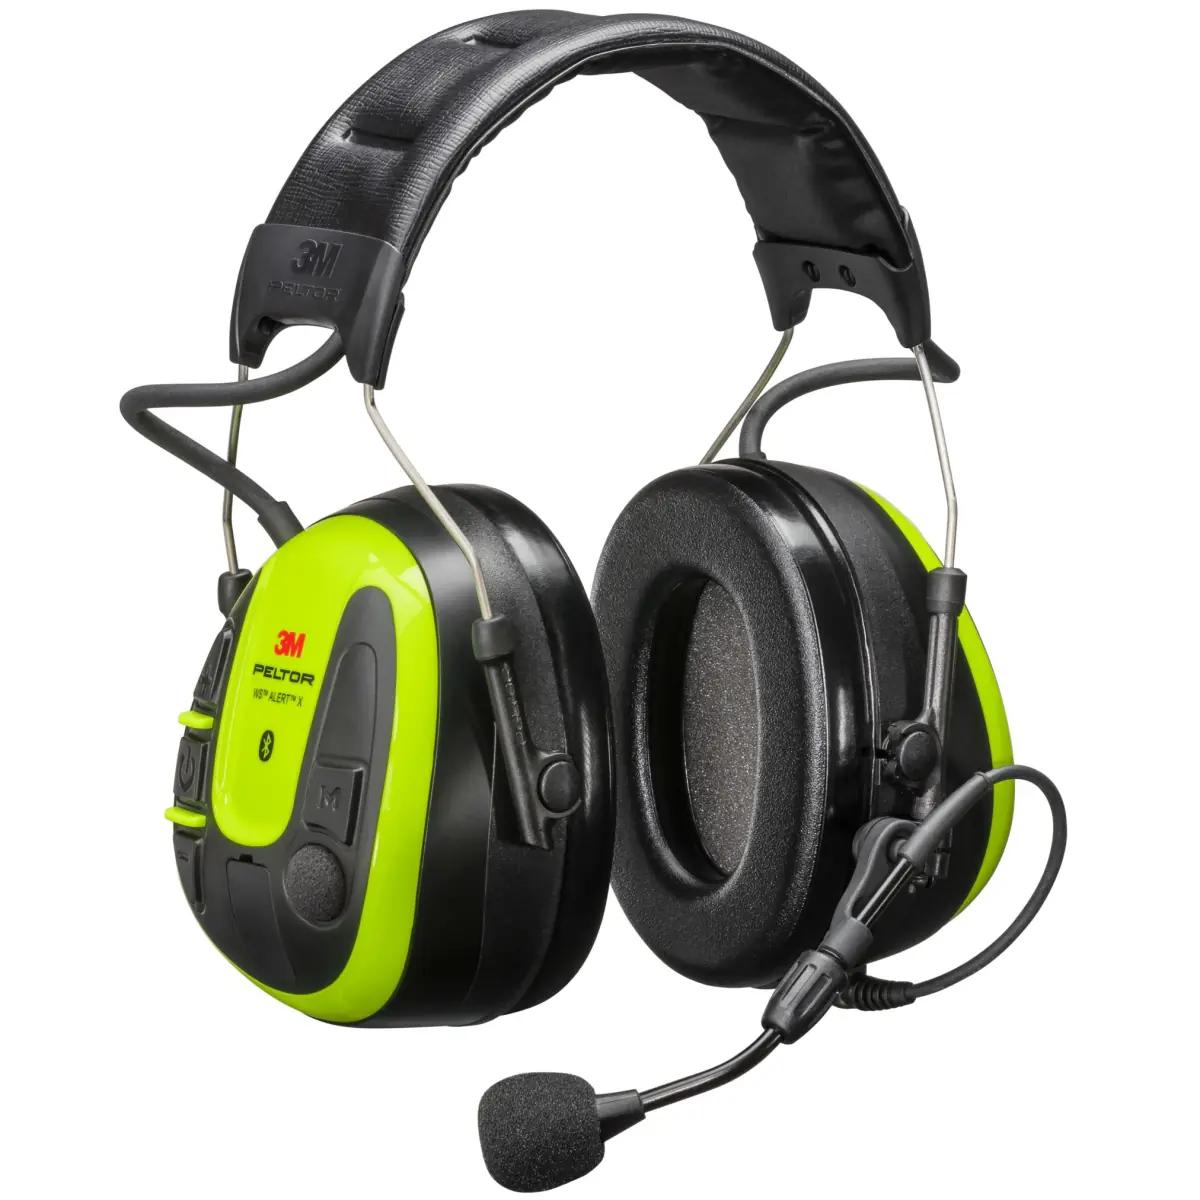 SportTac WS - Protection auditive, casque antibruit - 3M Peltor